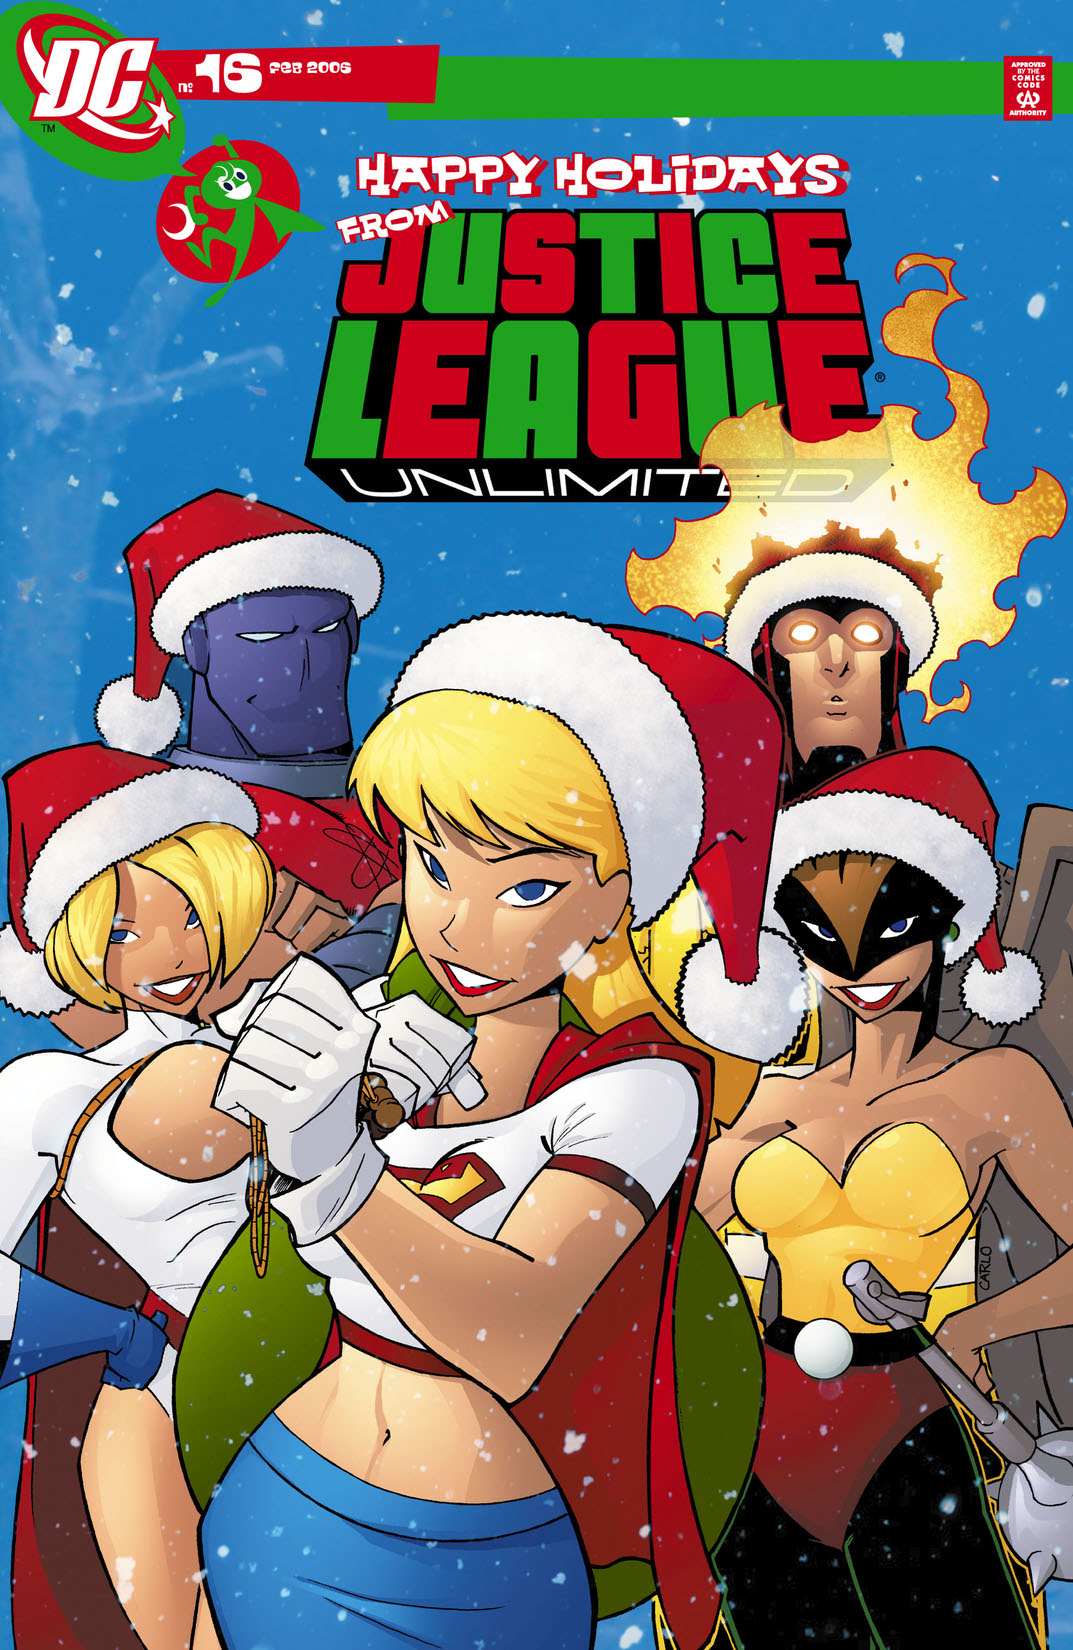 Justice League Unlimited #16 preview images